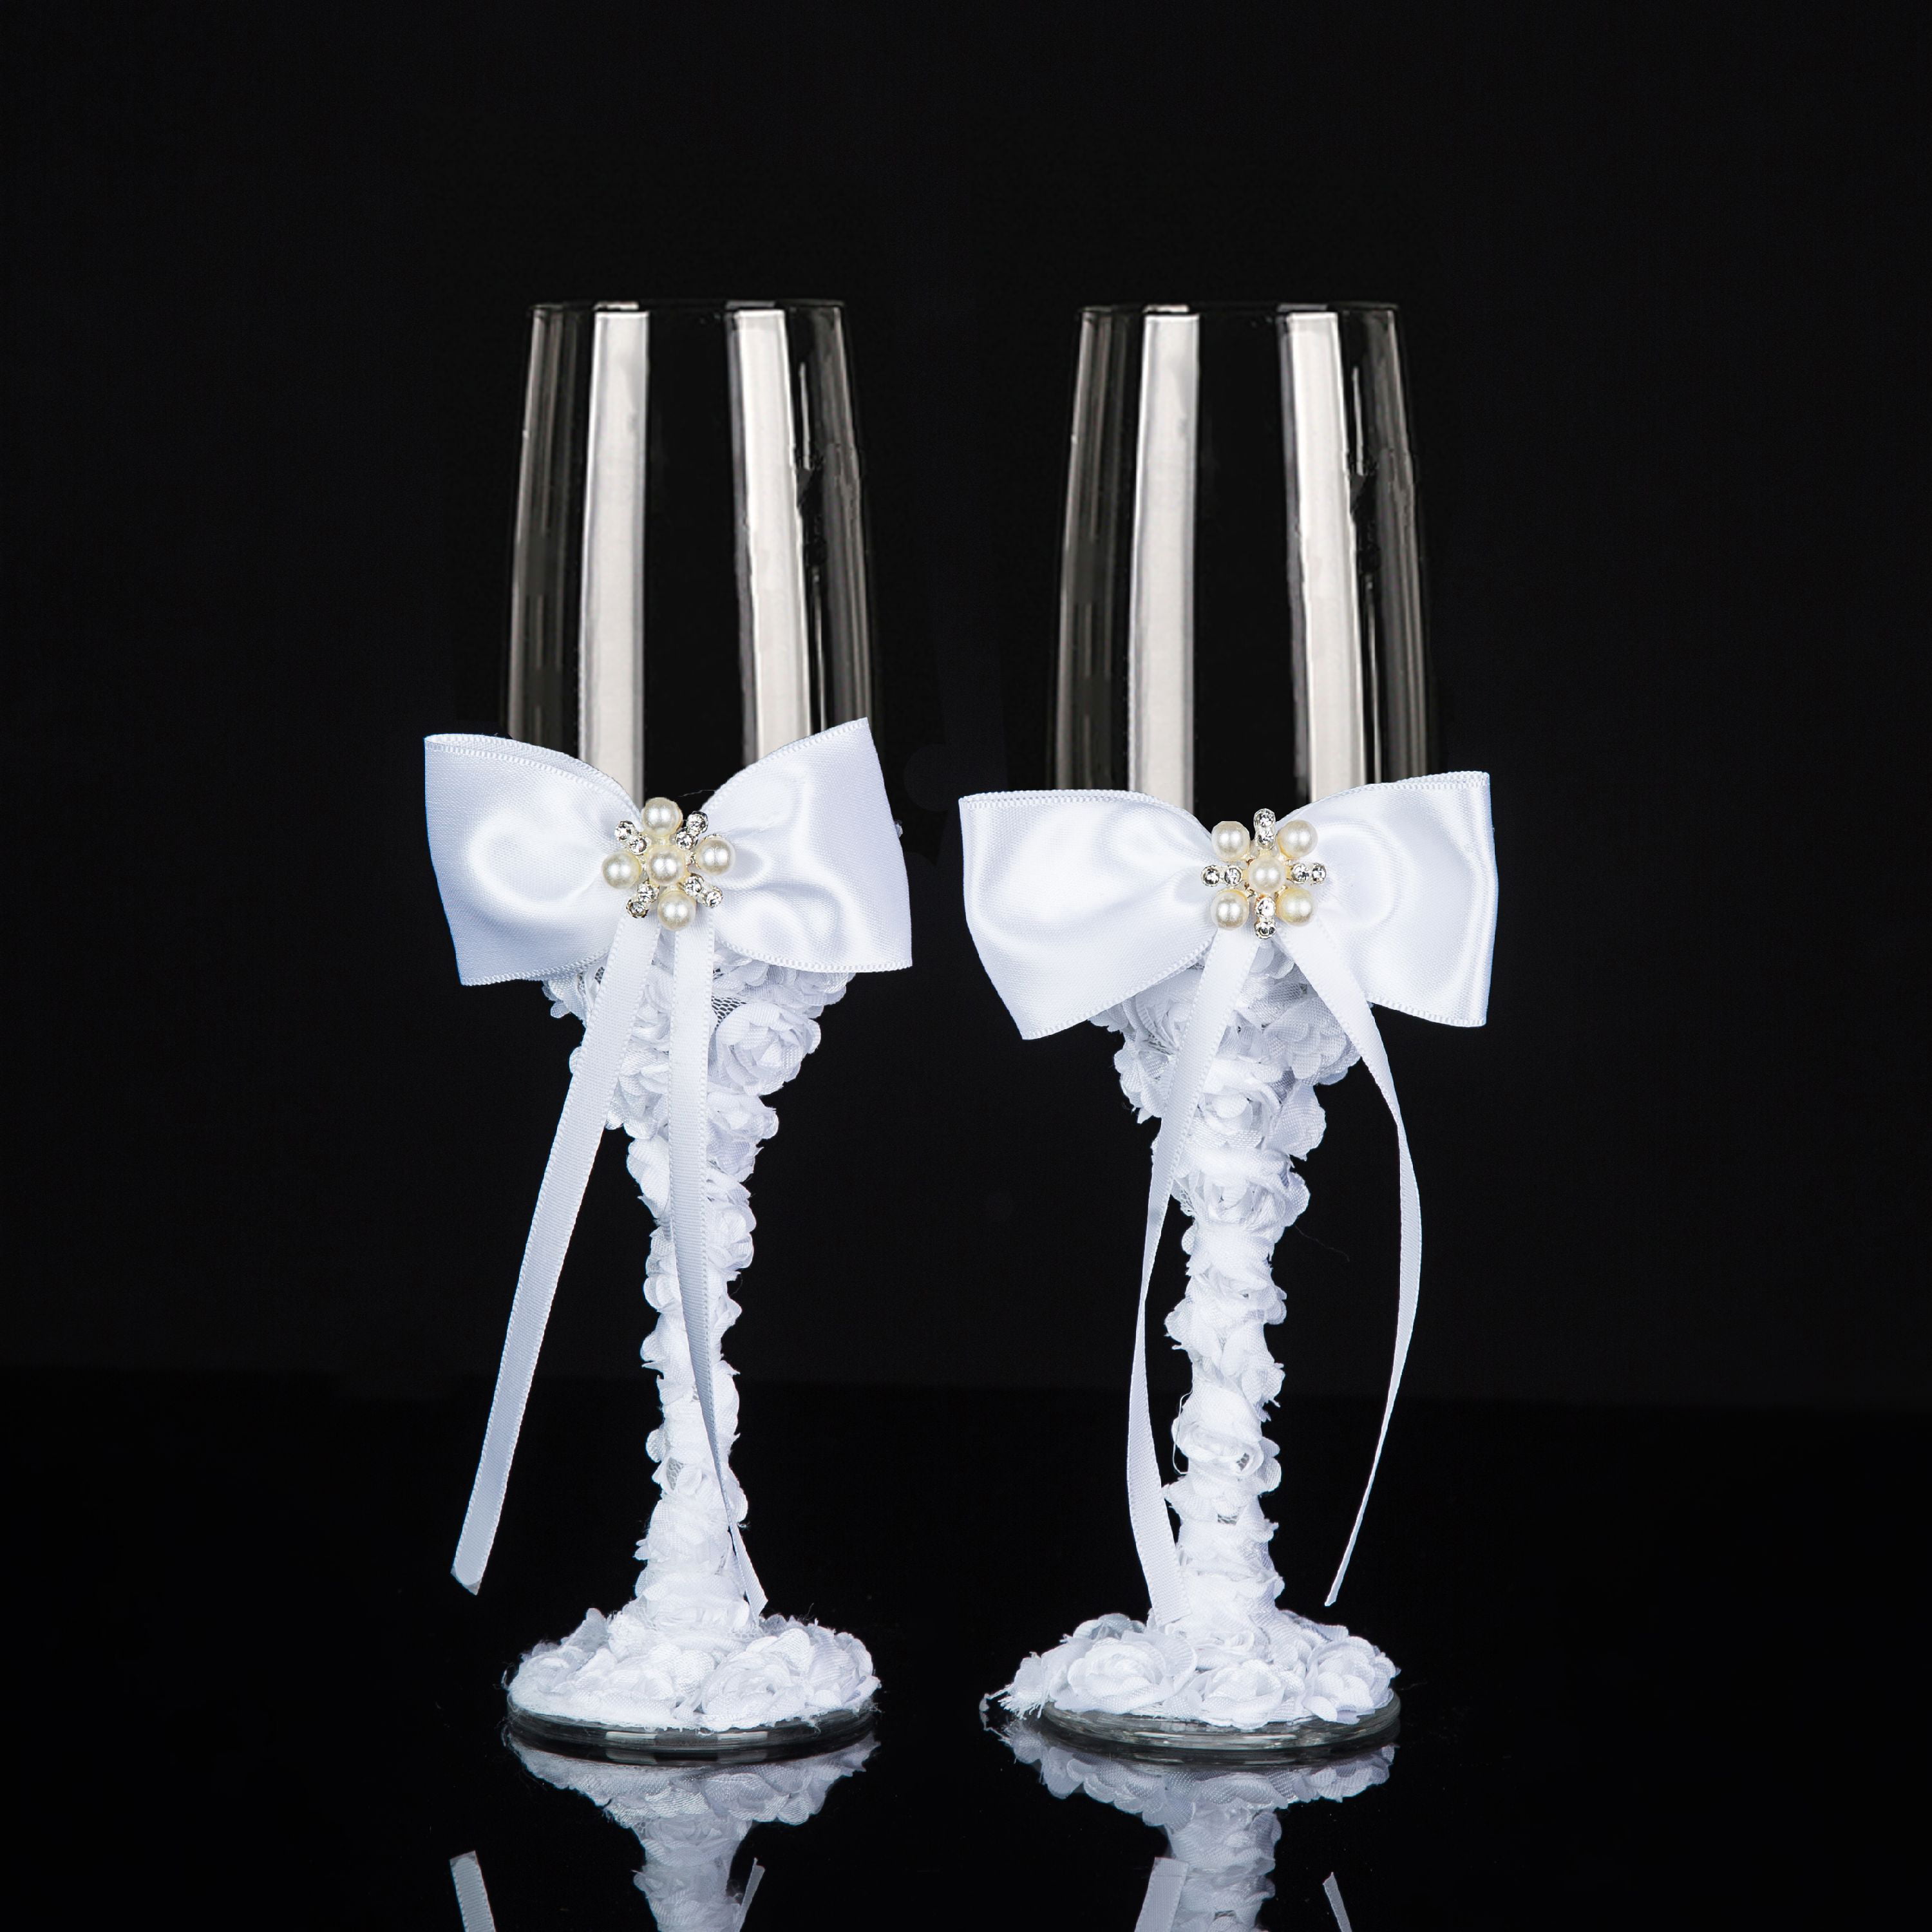 50 Wedding Glass Decoration ideas - YouTube